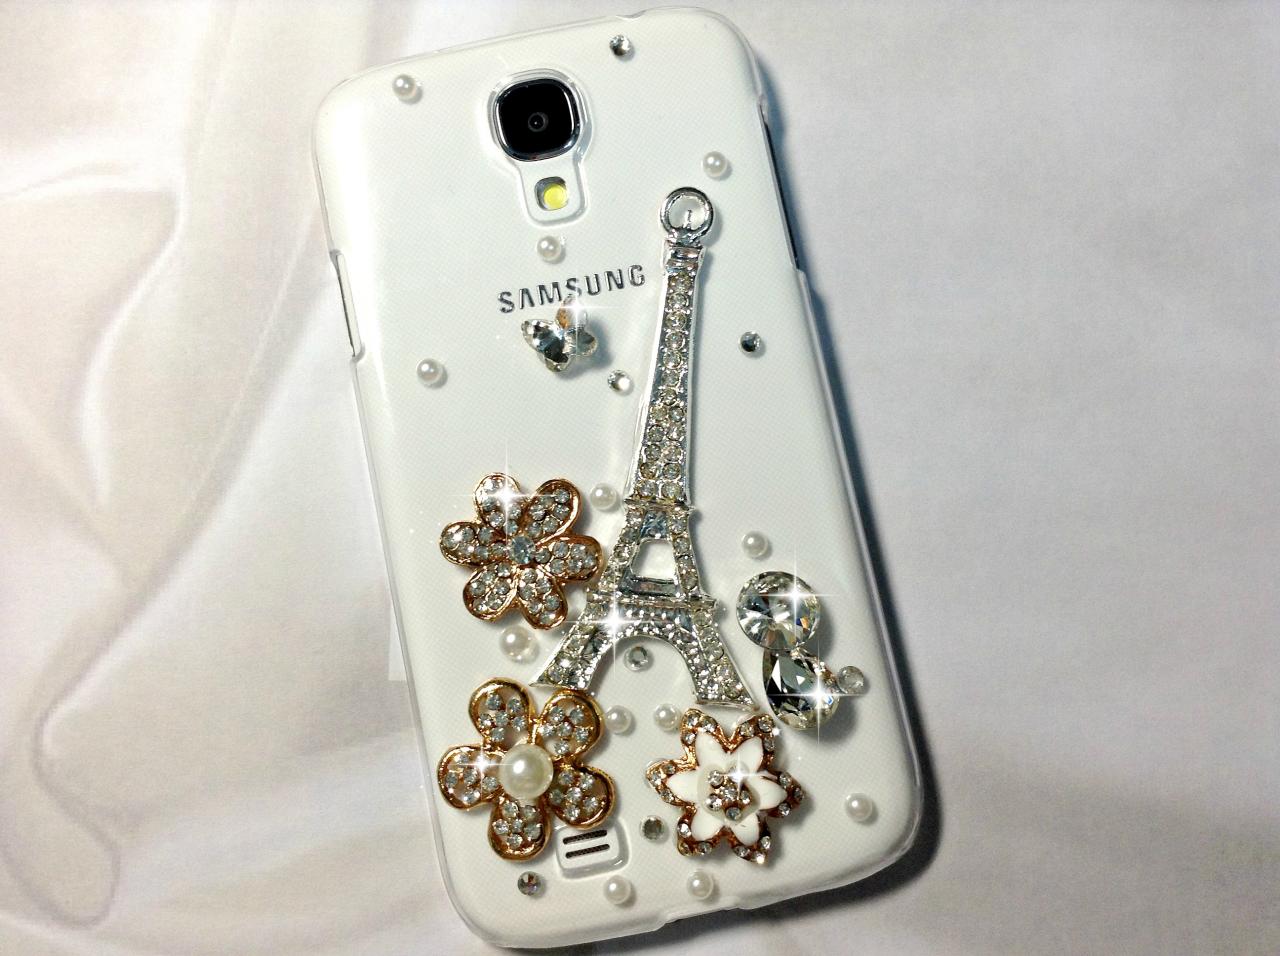 3d Handmade Eiffel Tower Flower Crystal Design Case Cover For Samsung Galaxy S 4 S4 Iv Lte I9500 I9505